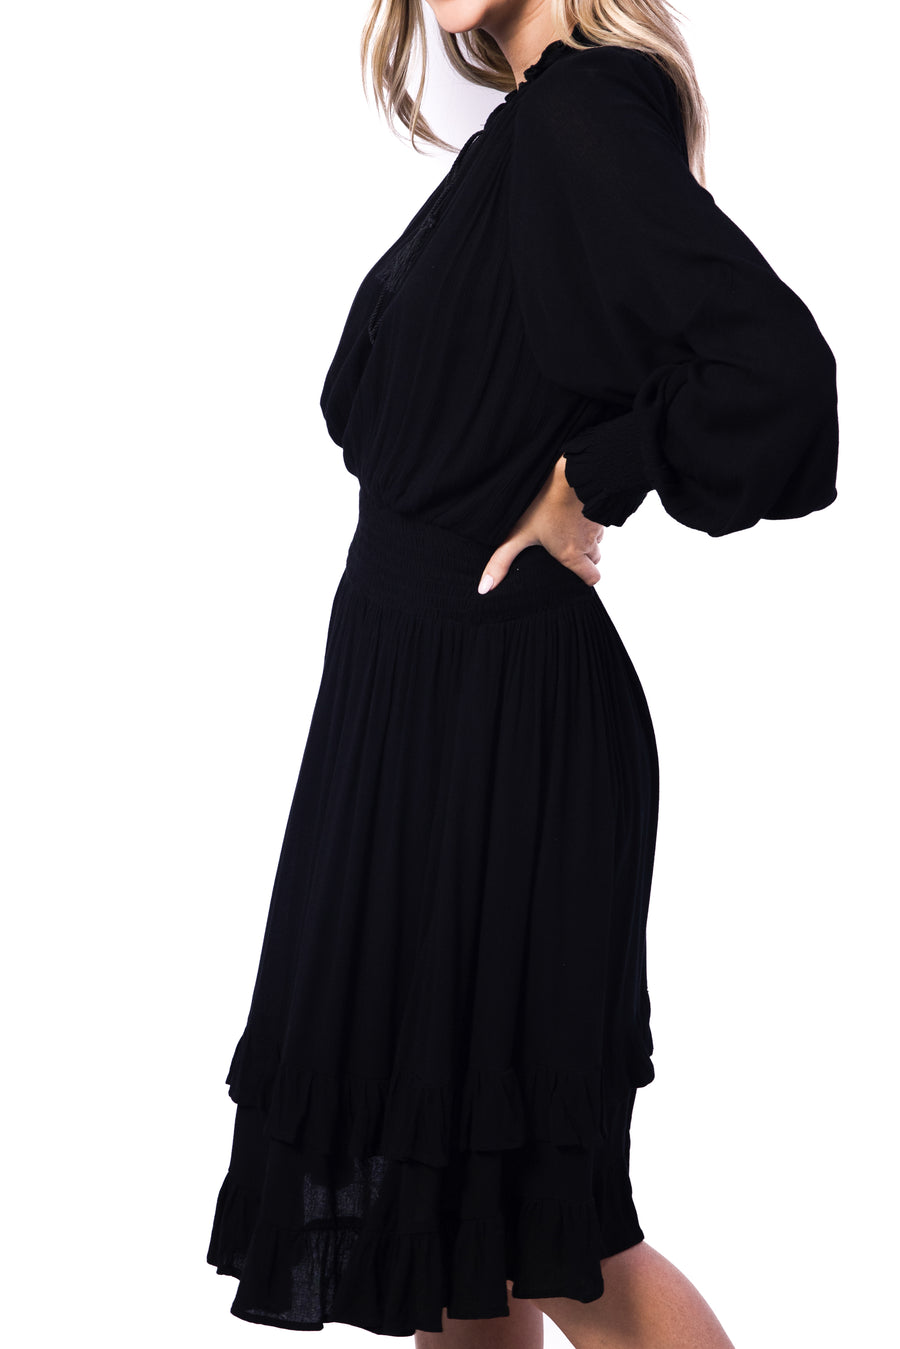 DITSY DRESS (Black) 36" & 40"